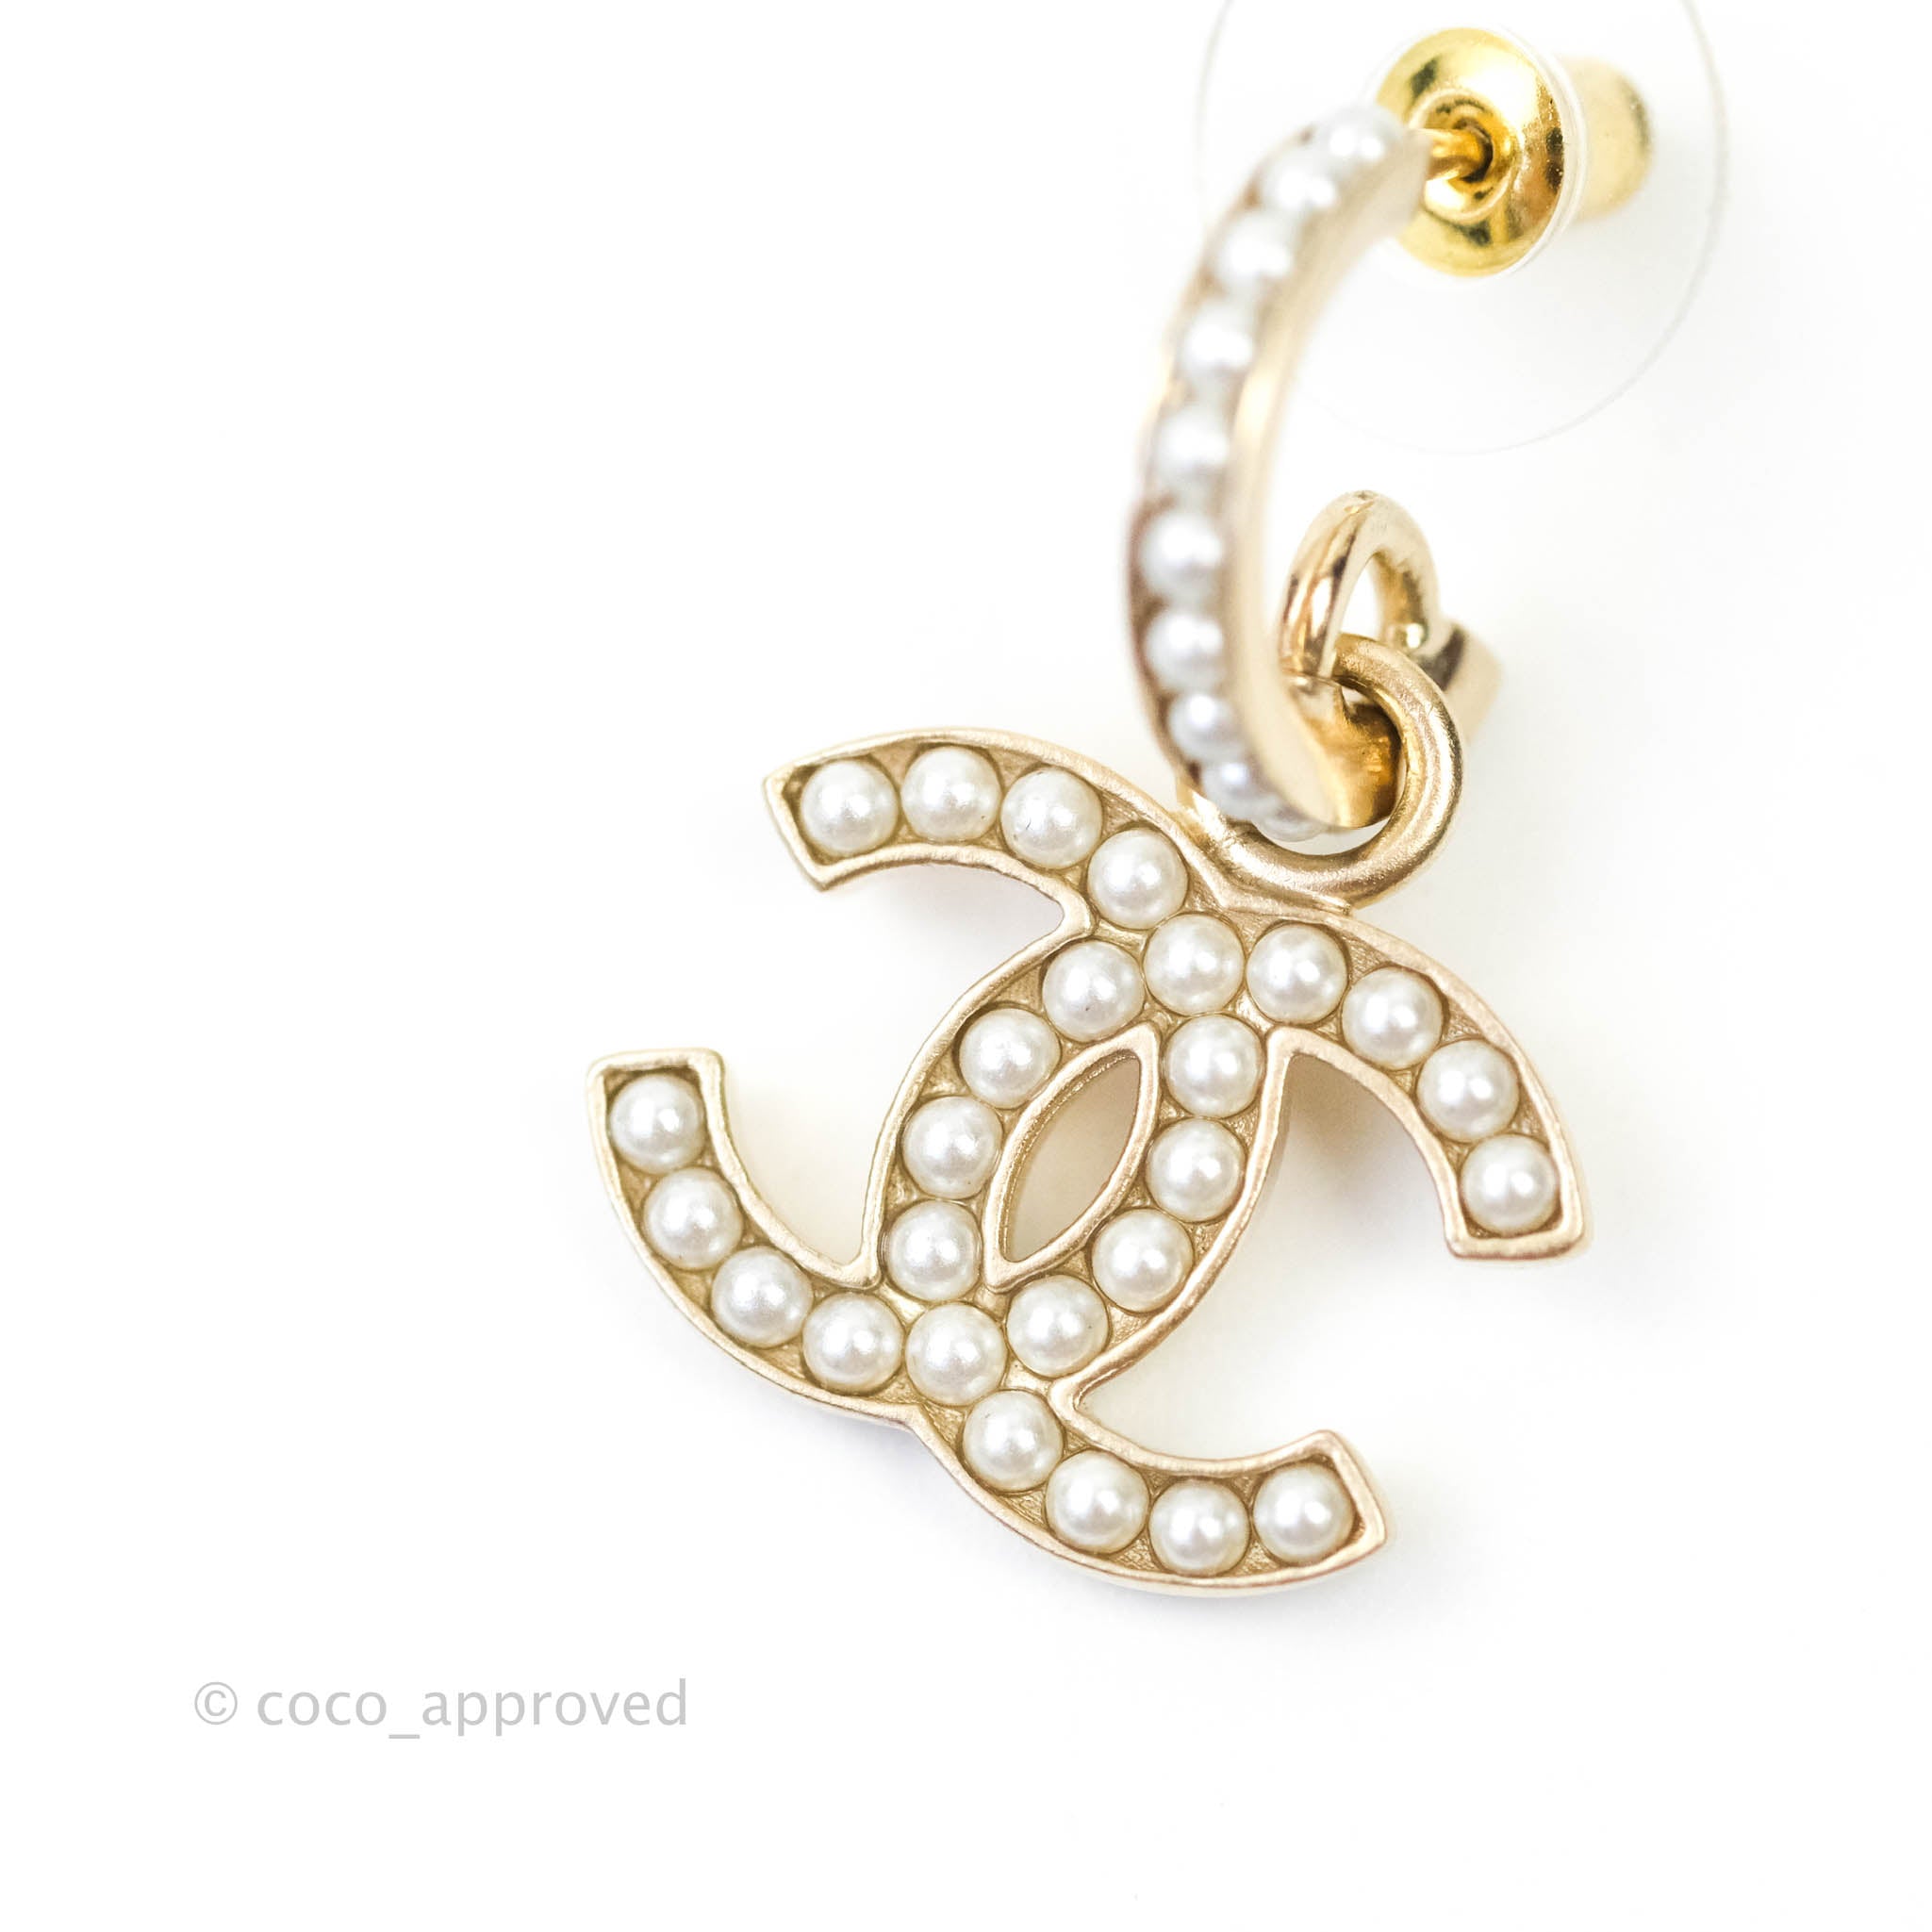 Chanel earrings cc fake - Gem